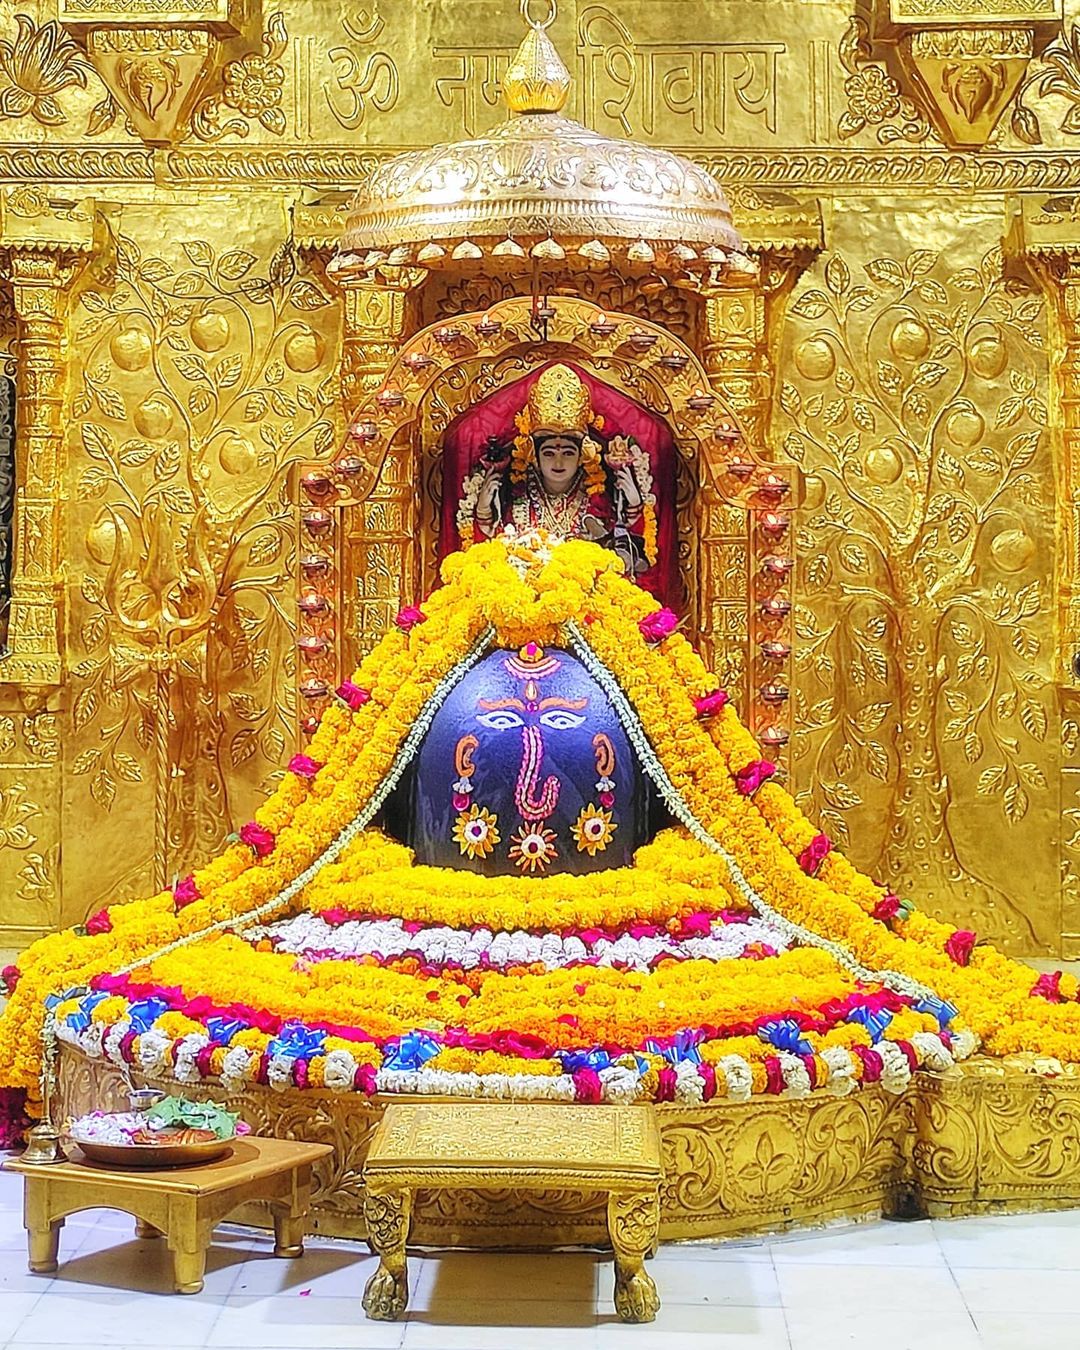 Shree Somnath Jyotirlinga Temple Images Photo Wallpaper Free Download